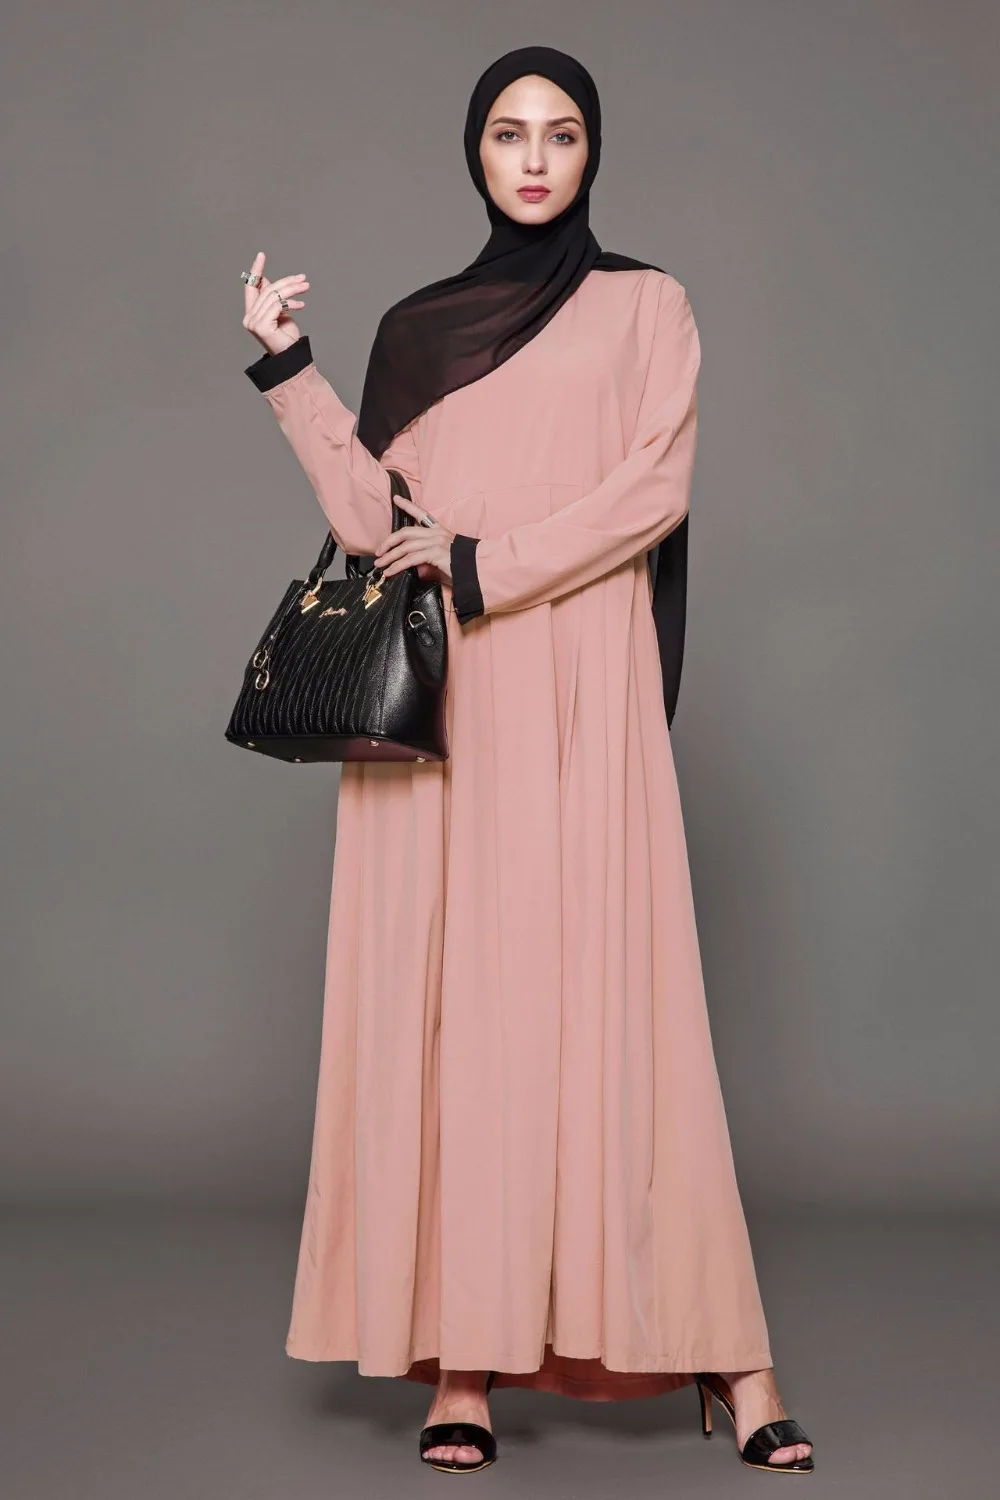 2018 Dubai abaya Muslim clothing women dresses-in Islamic Clothing from ...